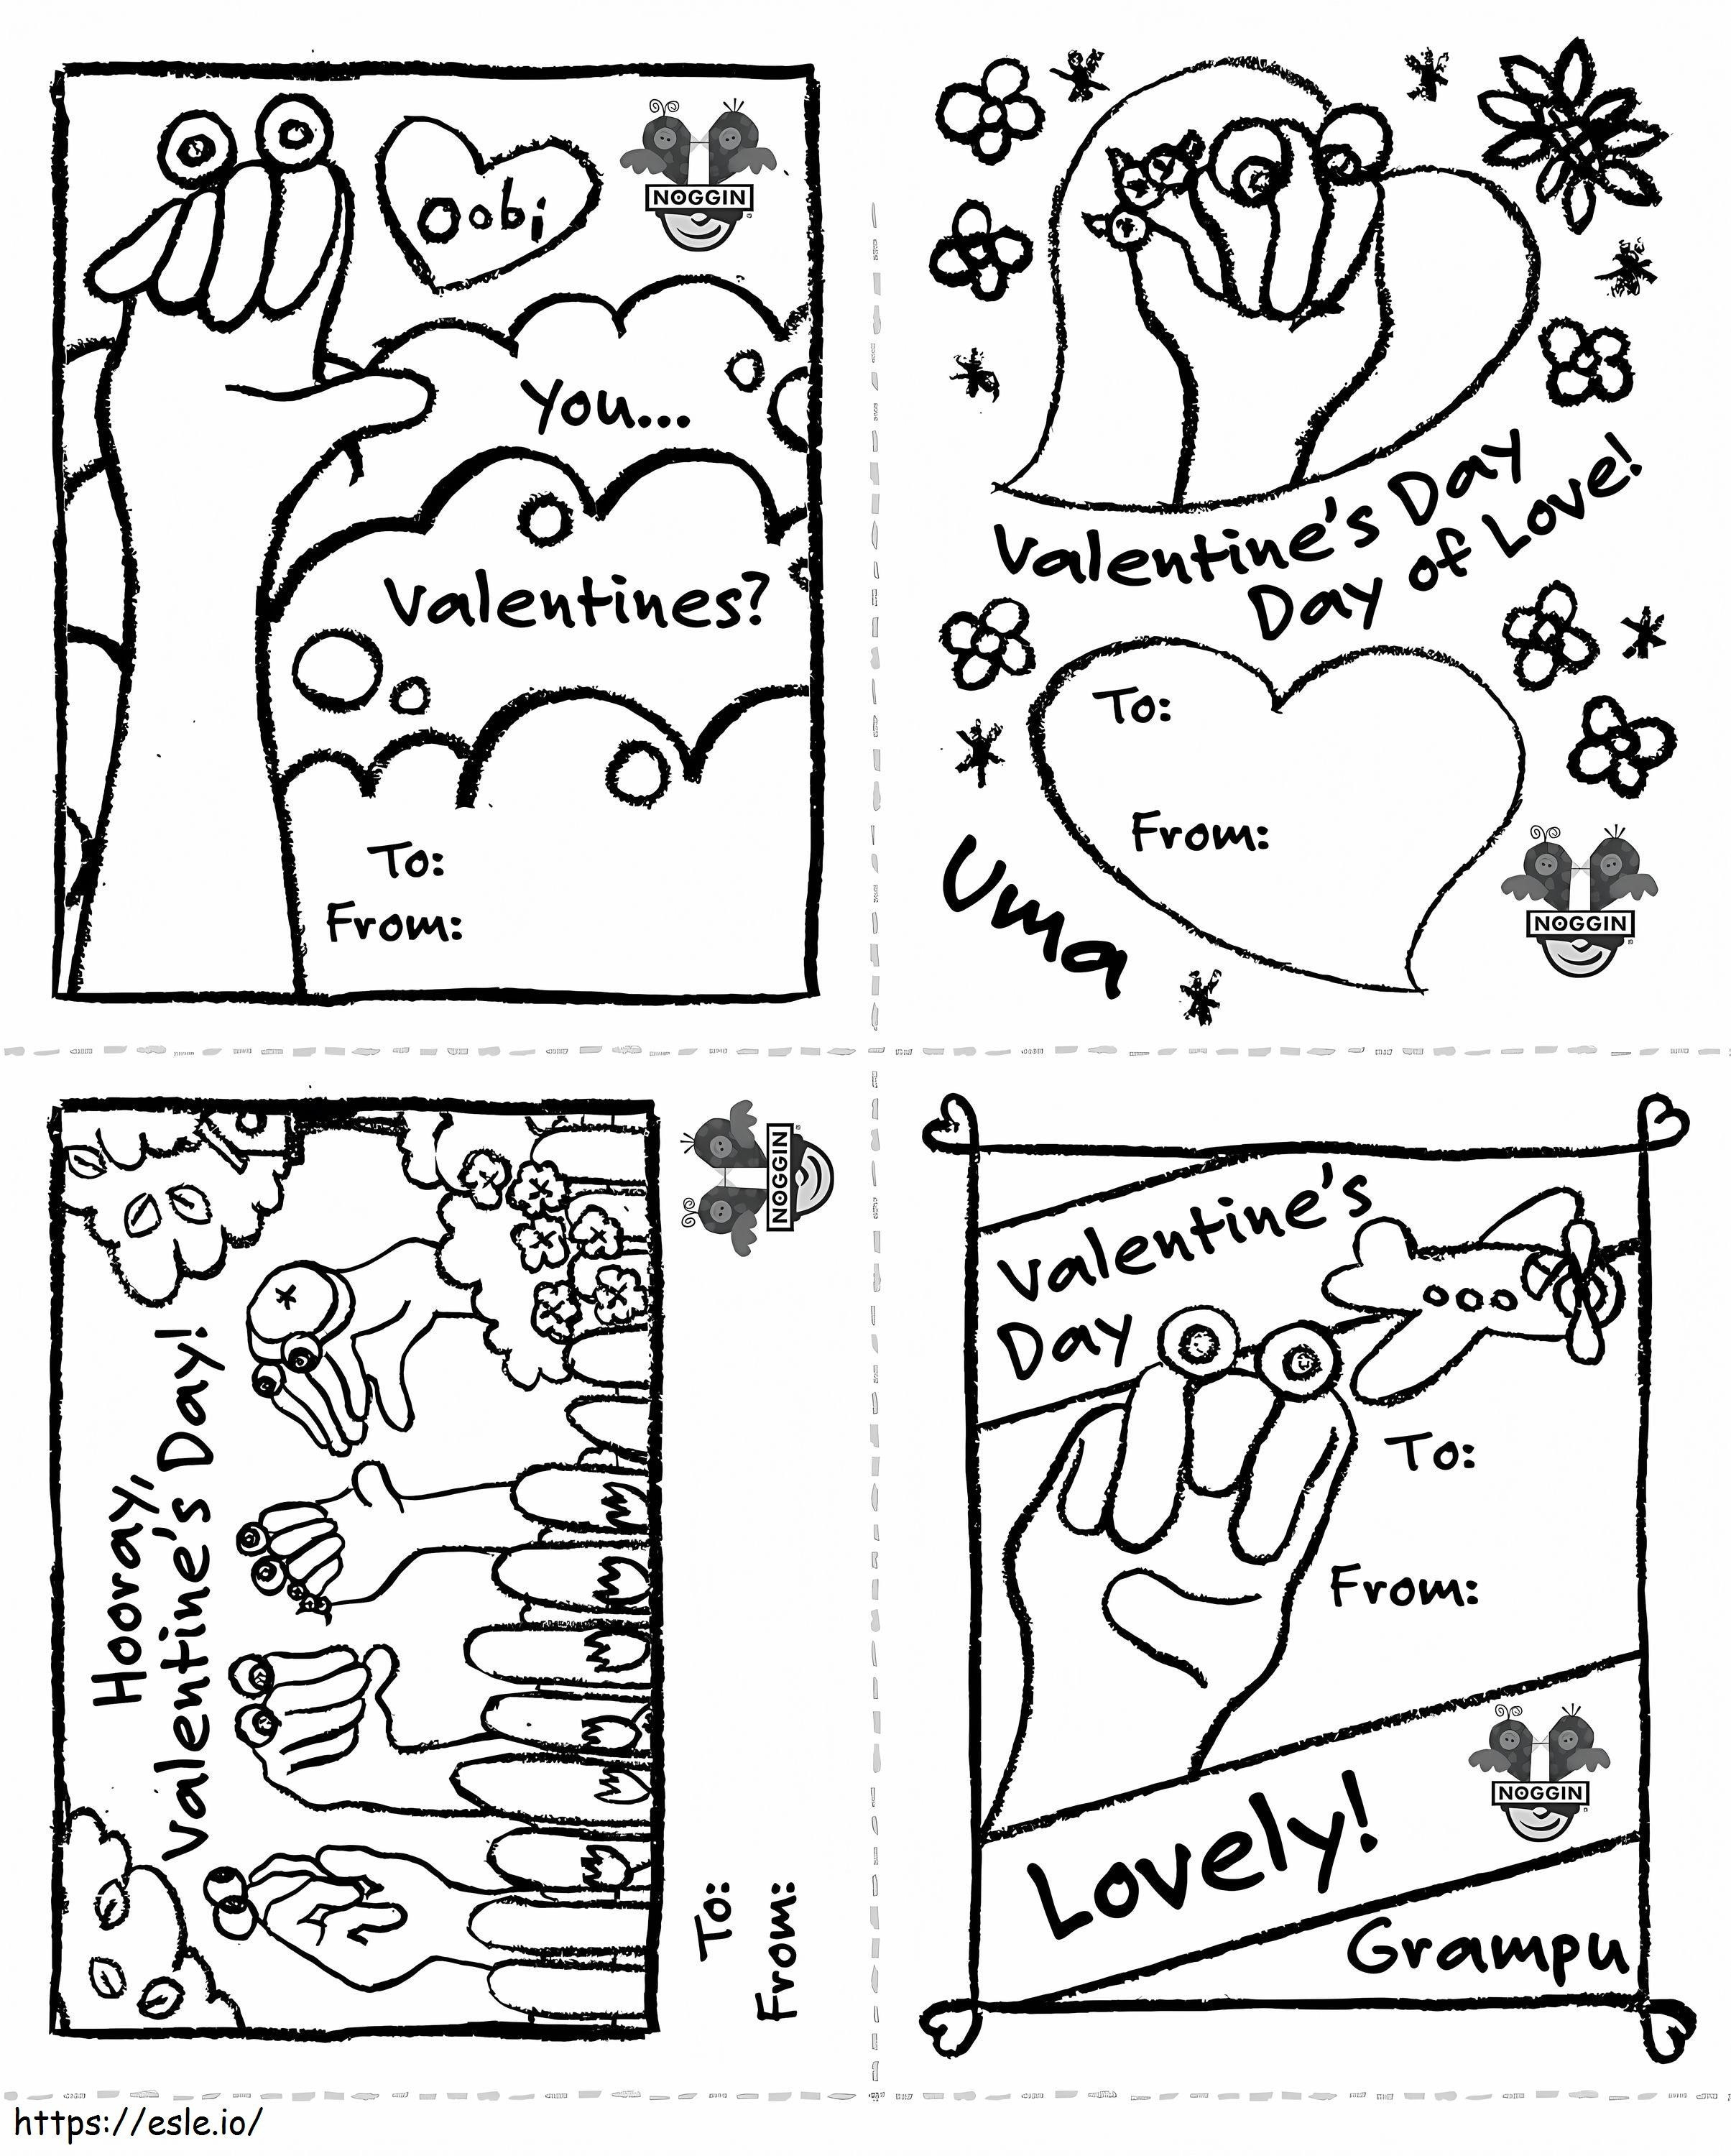 Oobi Valentines coloring page